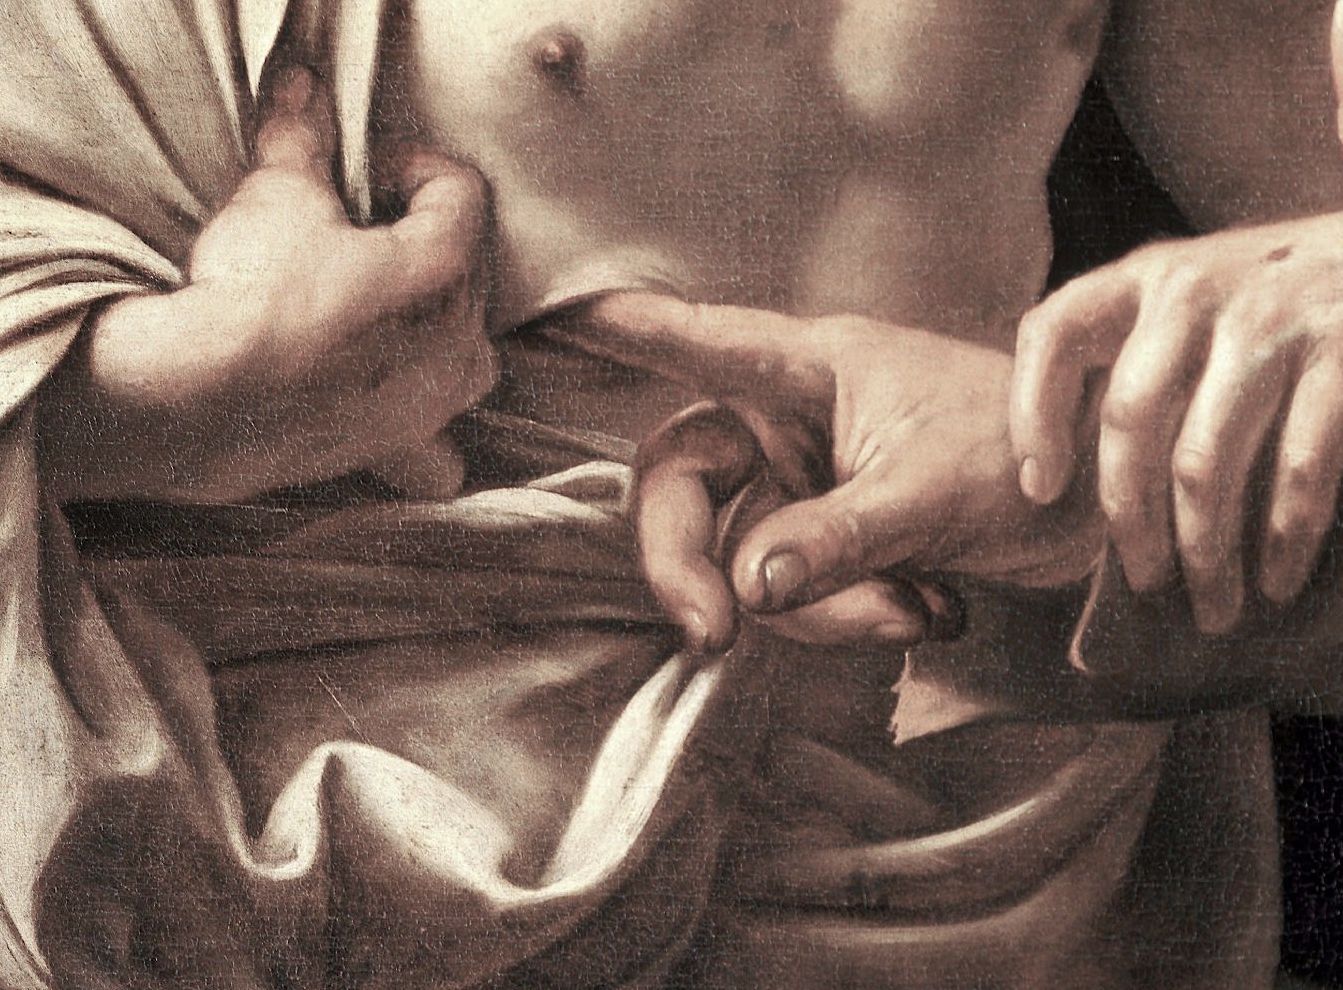 Michelangelo Merisi